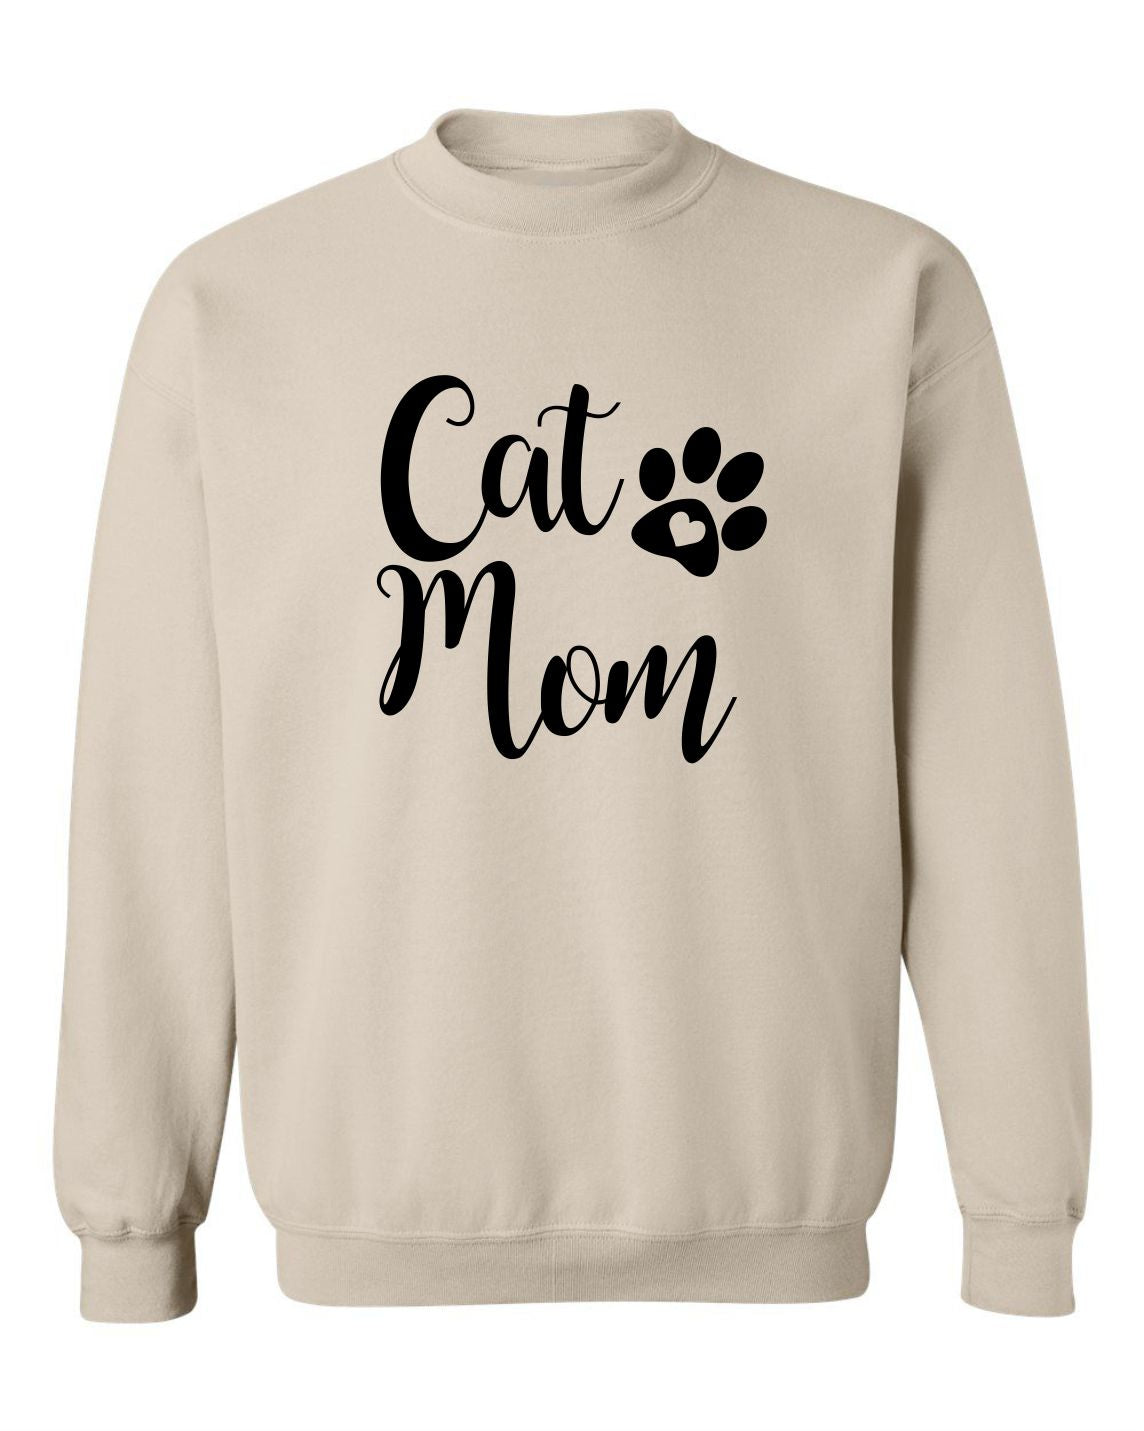 "Cat Mom" Unisex Crewneck Sweatshirt